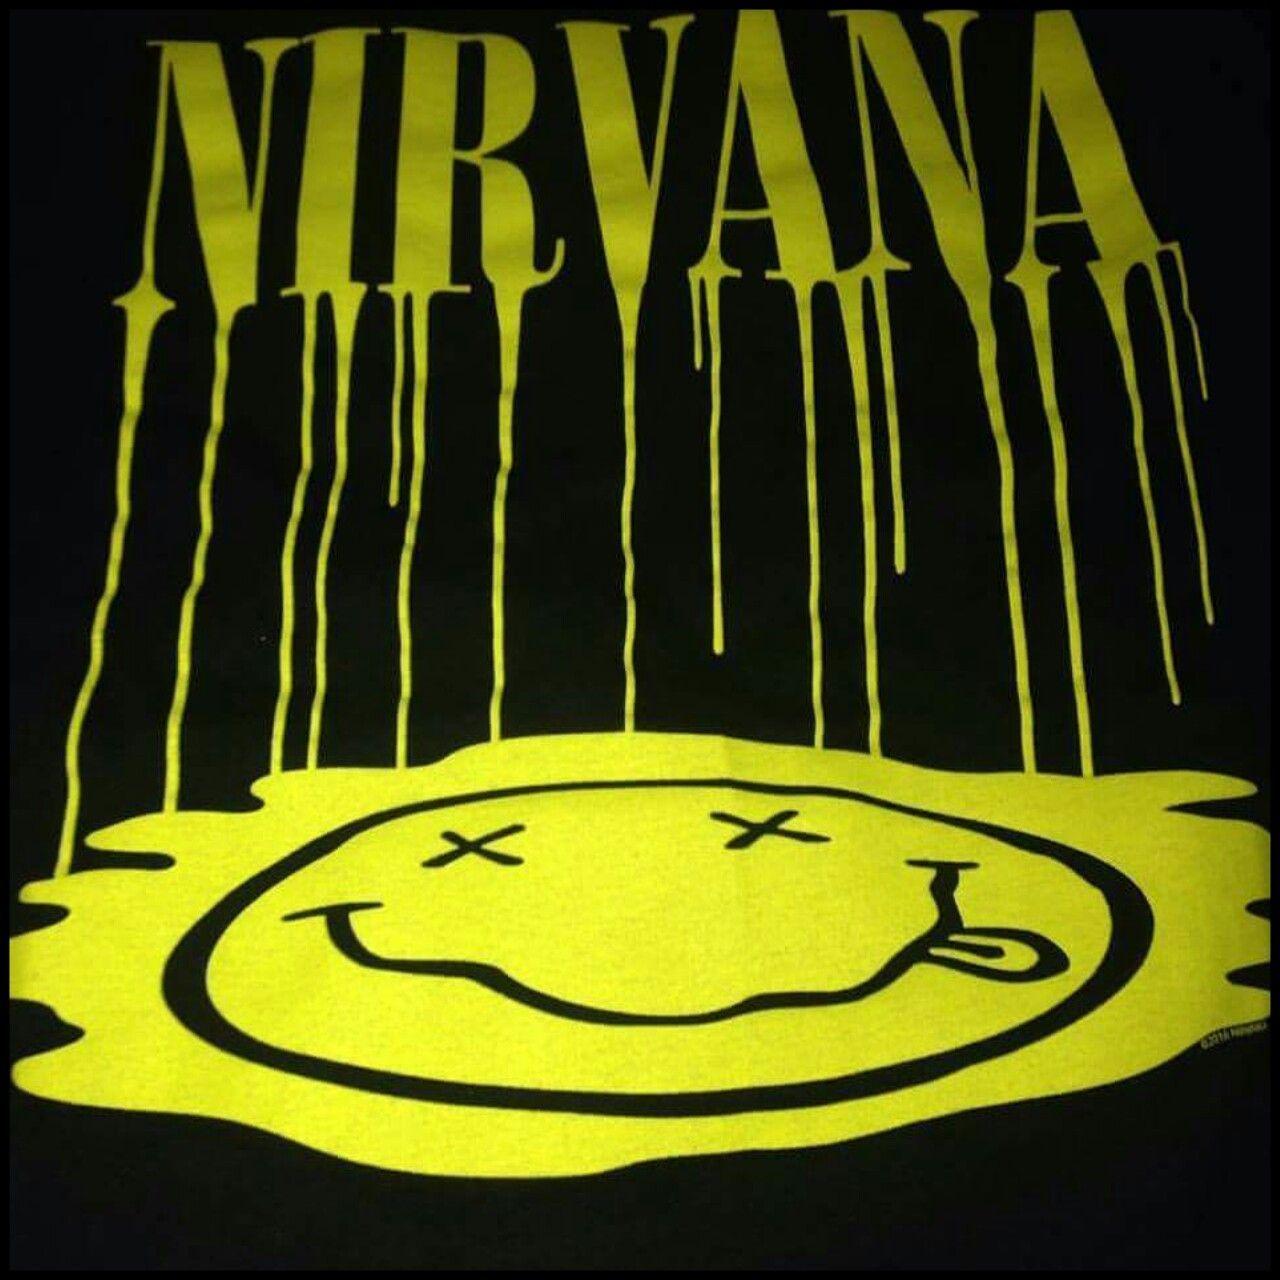 Nirvana Logo - Cool logo. All about Kurt Cobain. Kurt Cobain, Nirvana